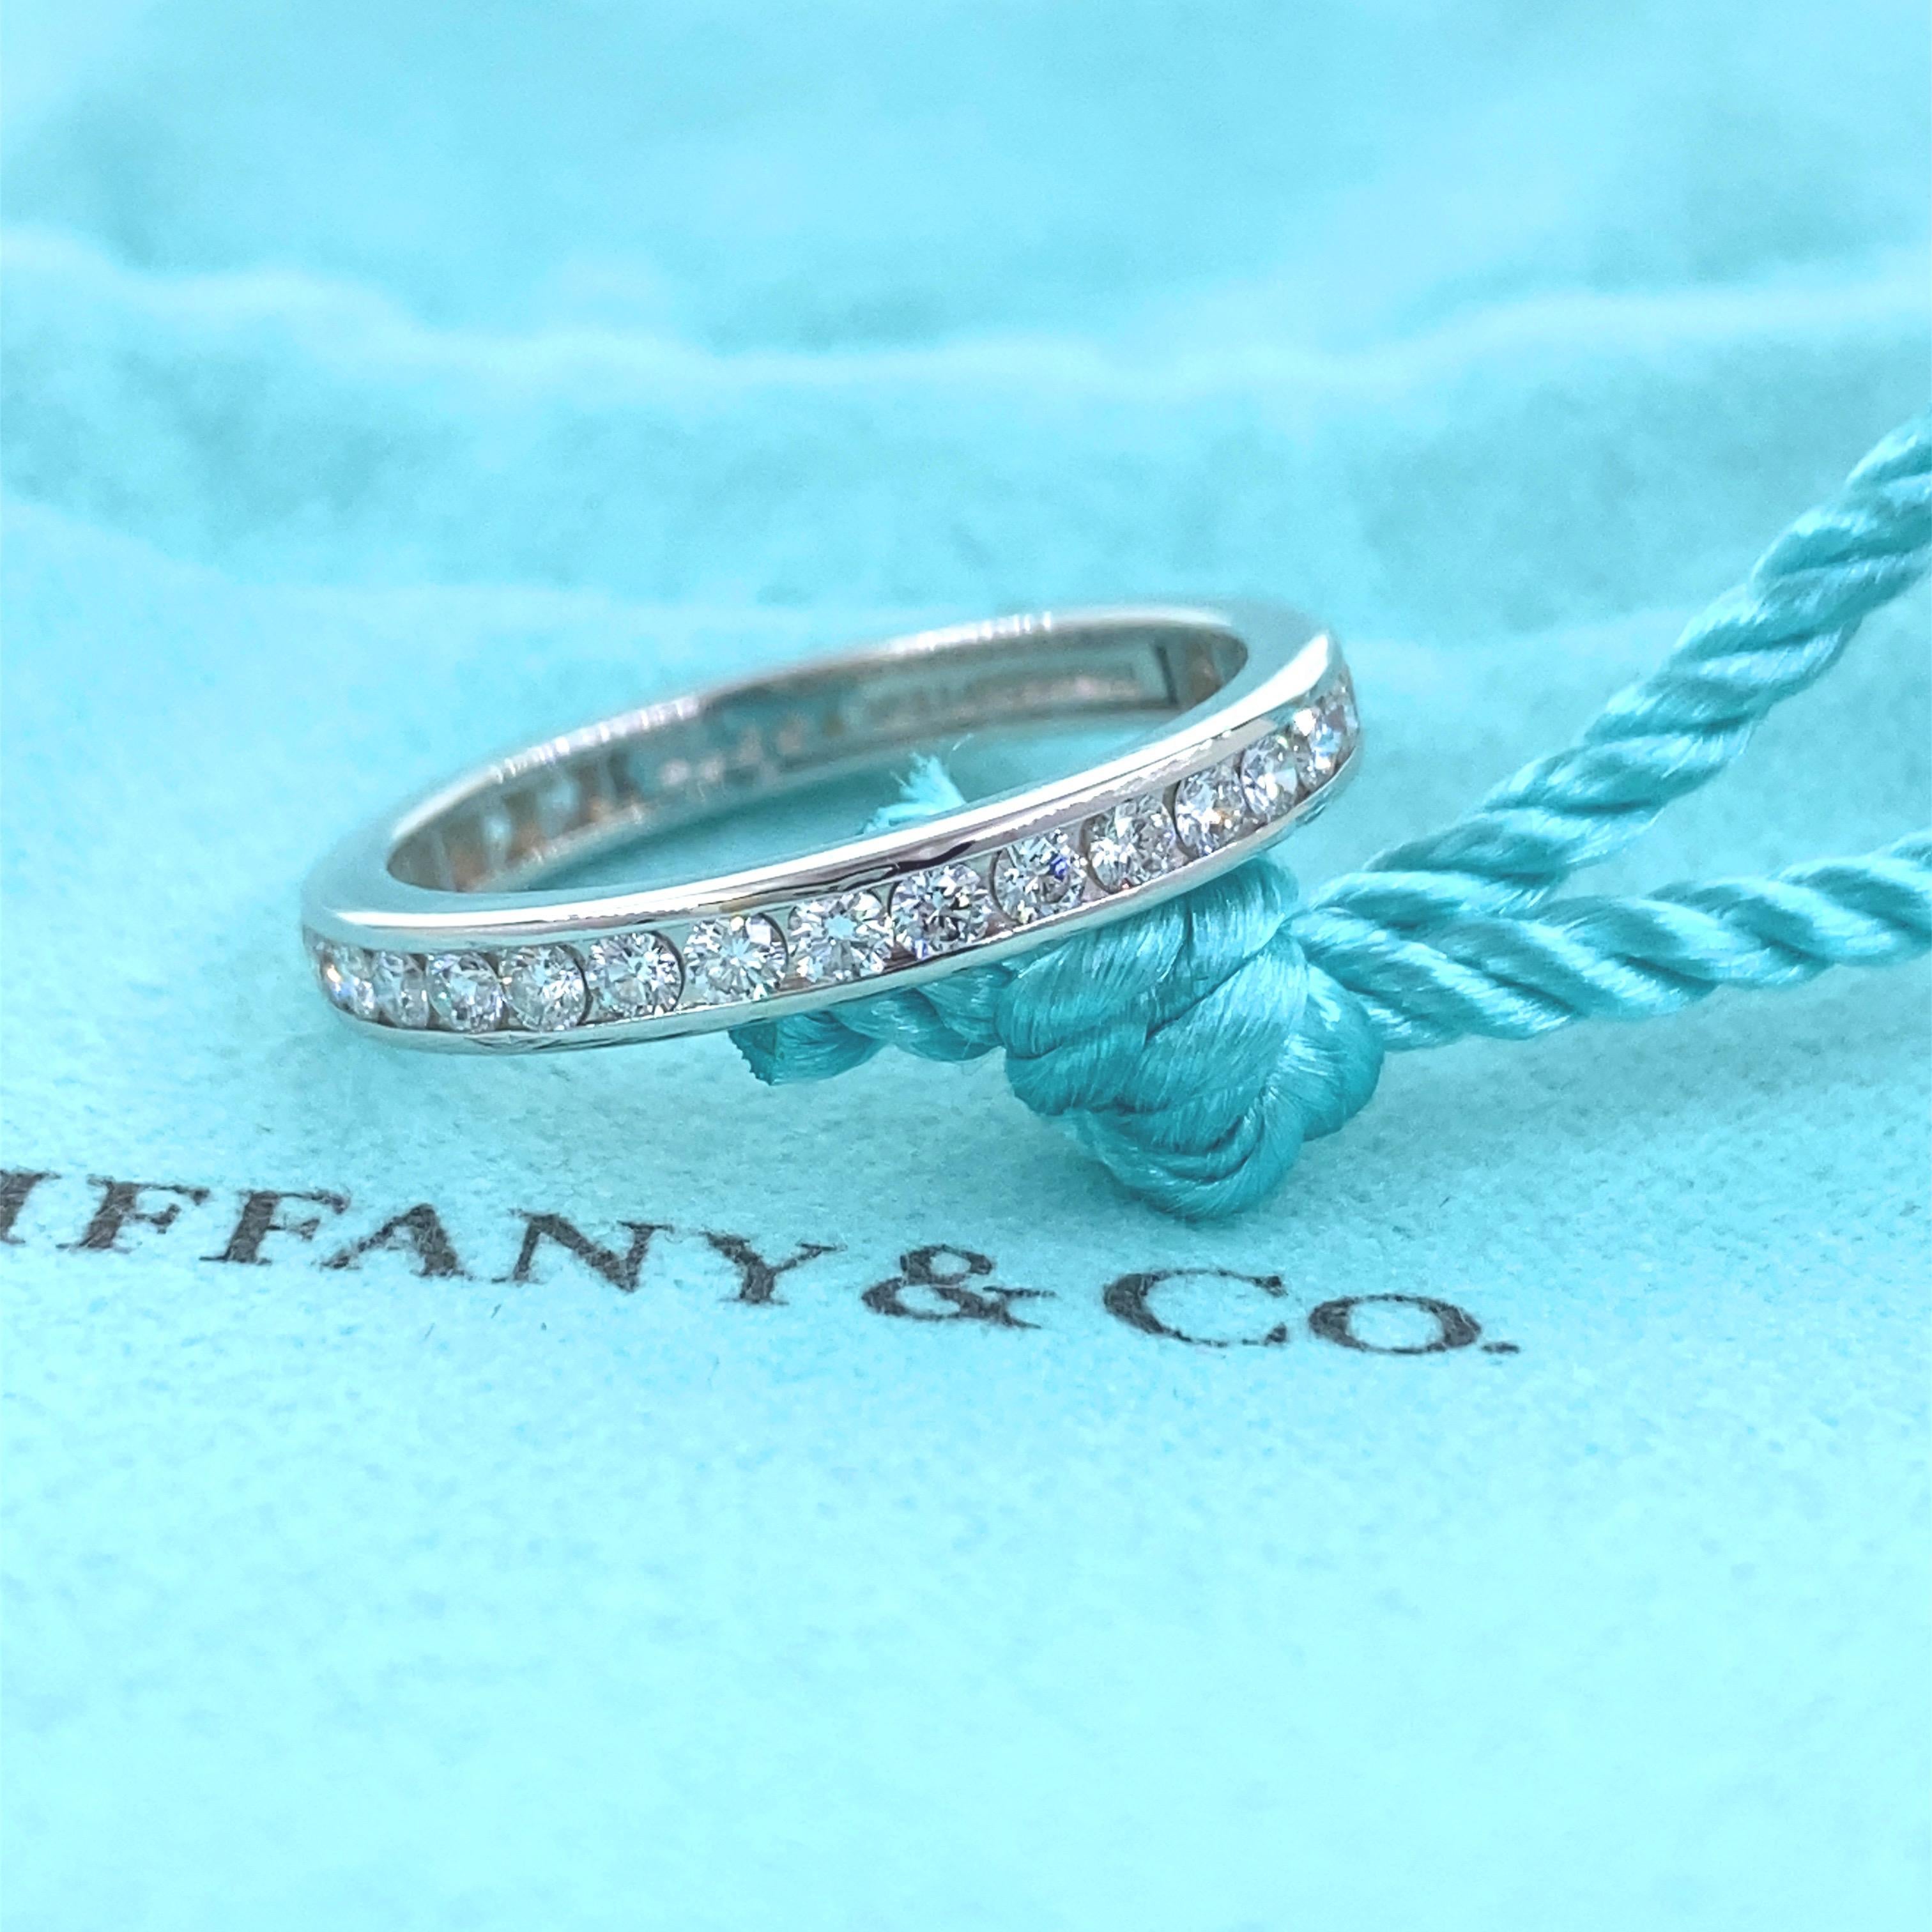 Tiffany & Co. Full Circle Diamond Eternity Wedding Band Ring
Style:  Full Circle Channel Set Eternity
Metal:  Platinum PT950
Width:  2.5 MM
Size:  5.75
TCW:  0.56 tcw
Main Diamond:  Round Brilliant Diamonds
Color & Clarity:  F - G / VS 
Hallmark: 